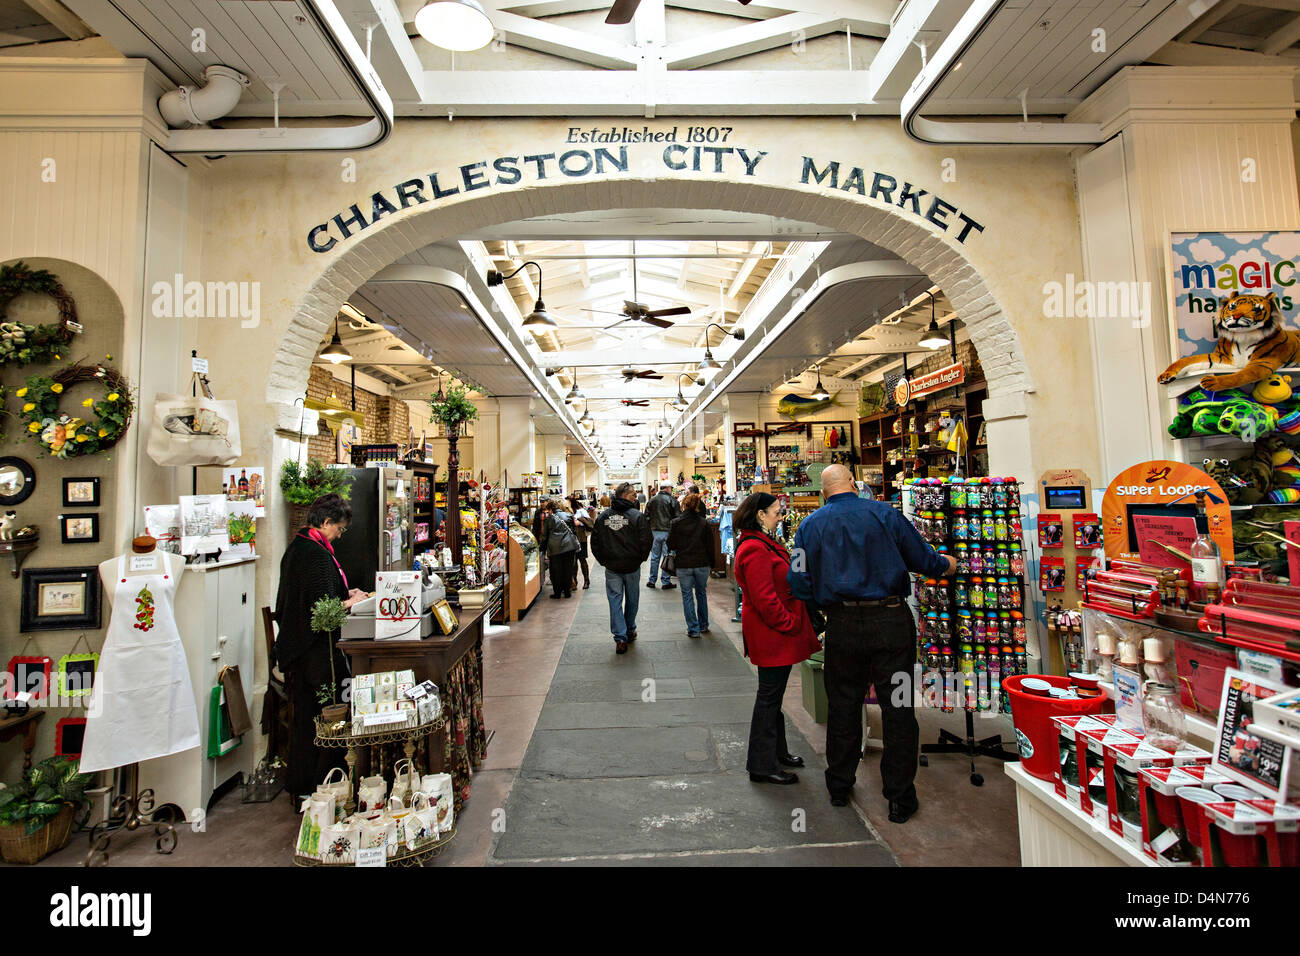 Historic Charleston City Market On Market Street In Charleston Sc Stock Photo Alamy